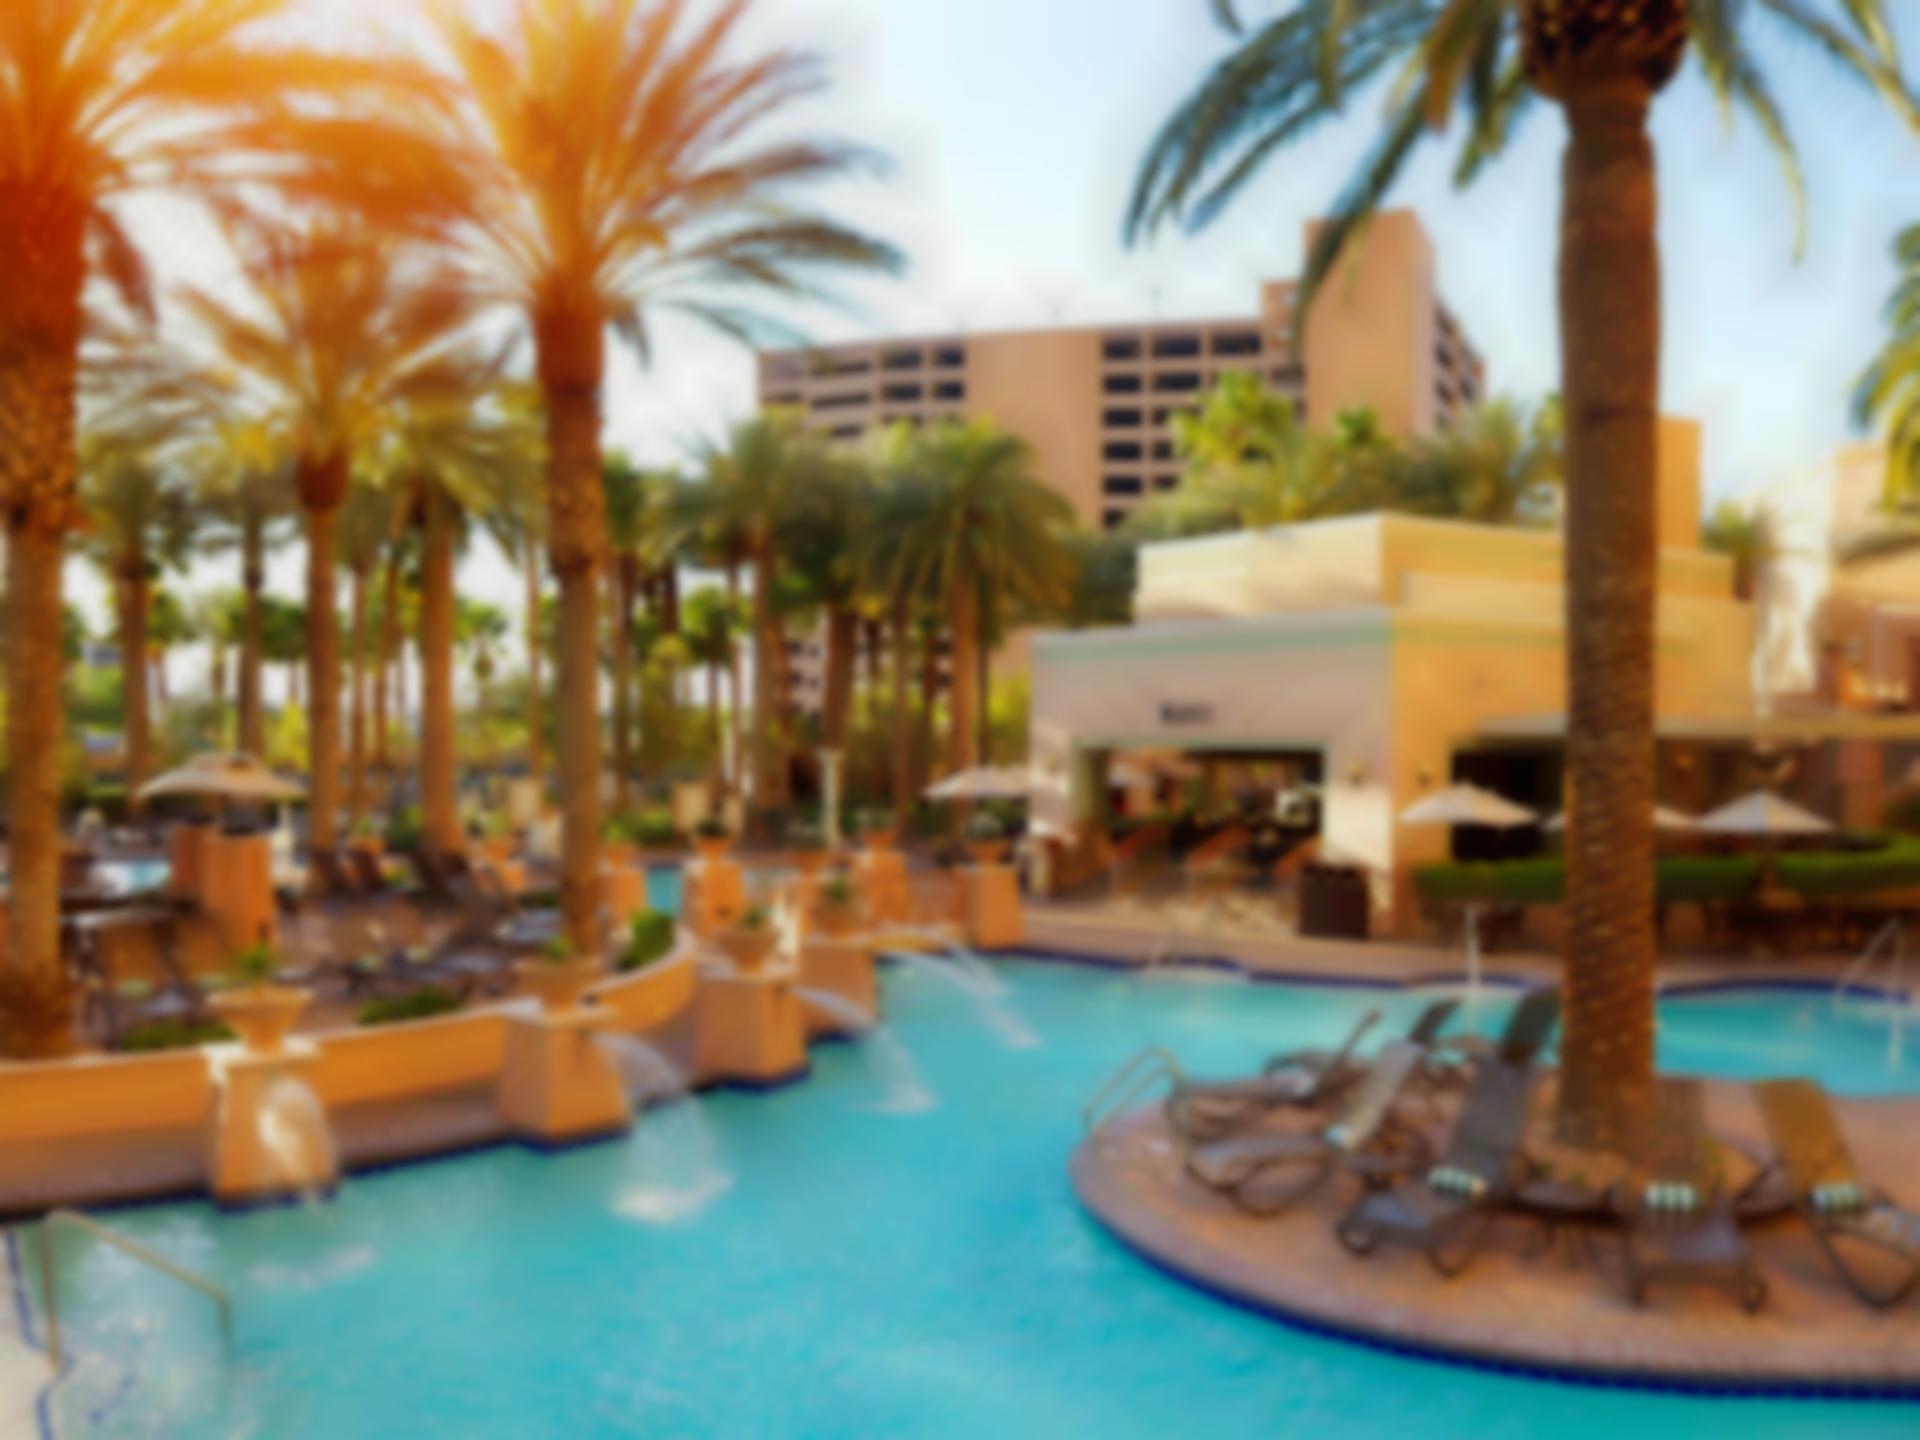 Hilton Grand Vacations Club on the Las Vegas Strip